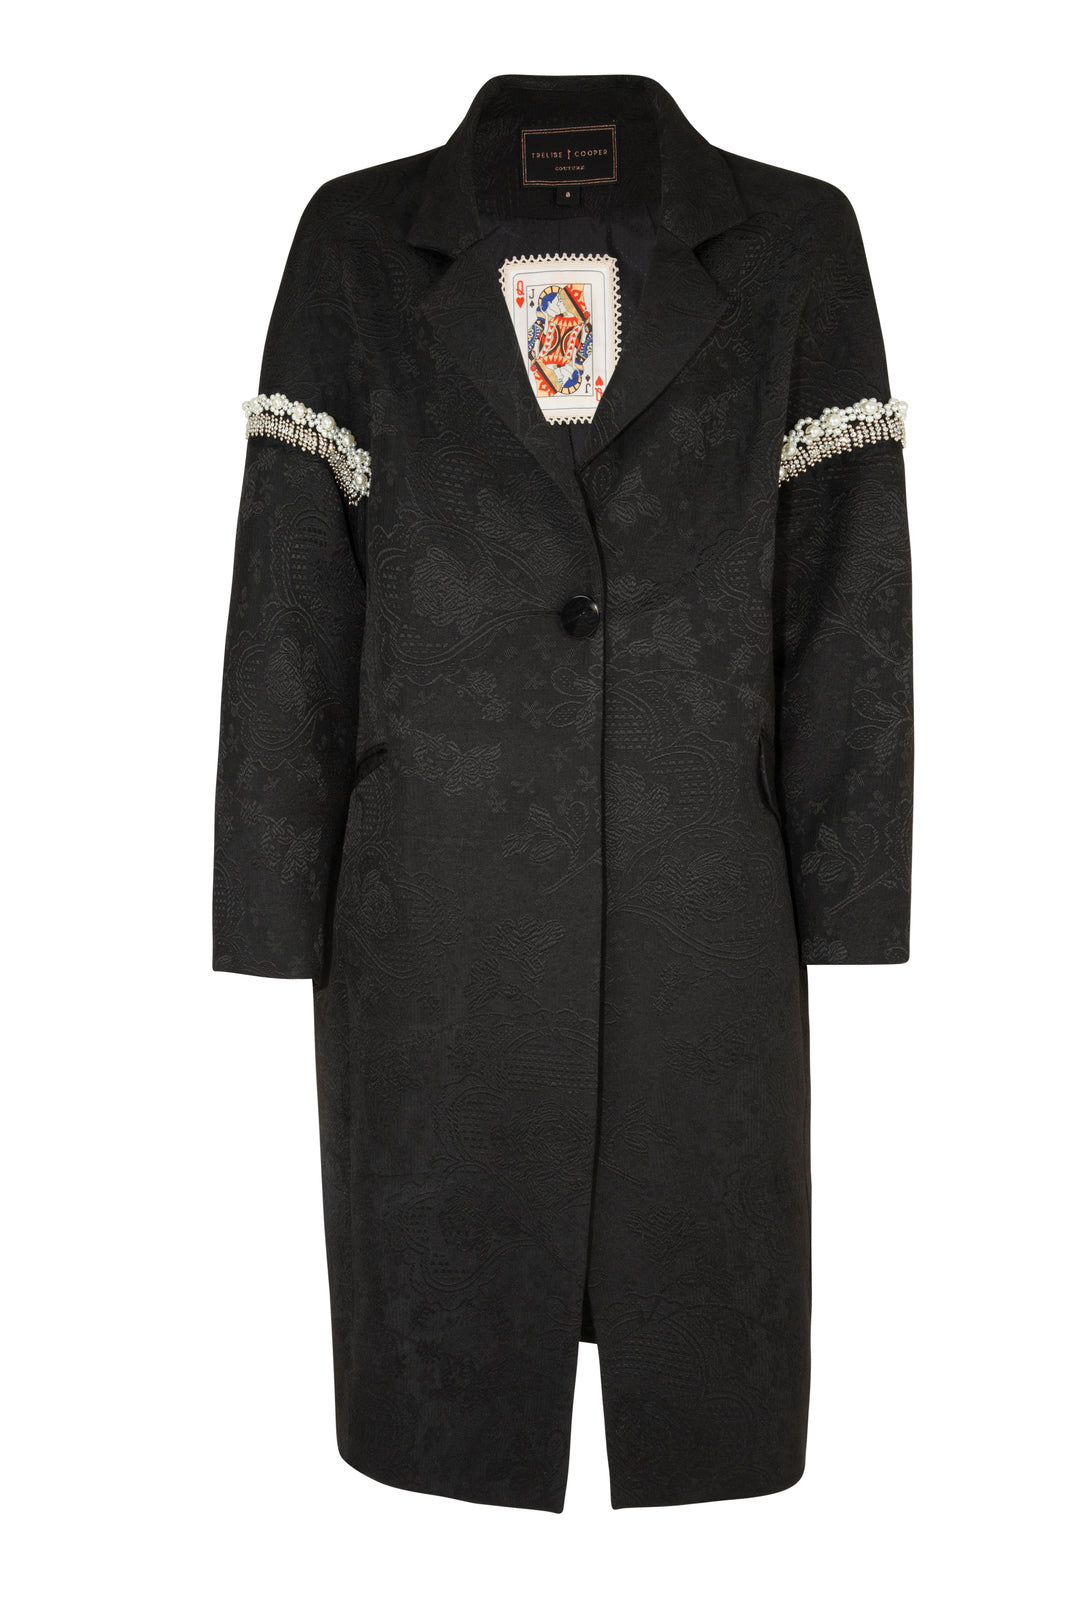 GOSSIP PEARL Coat (Black)